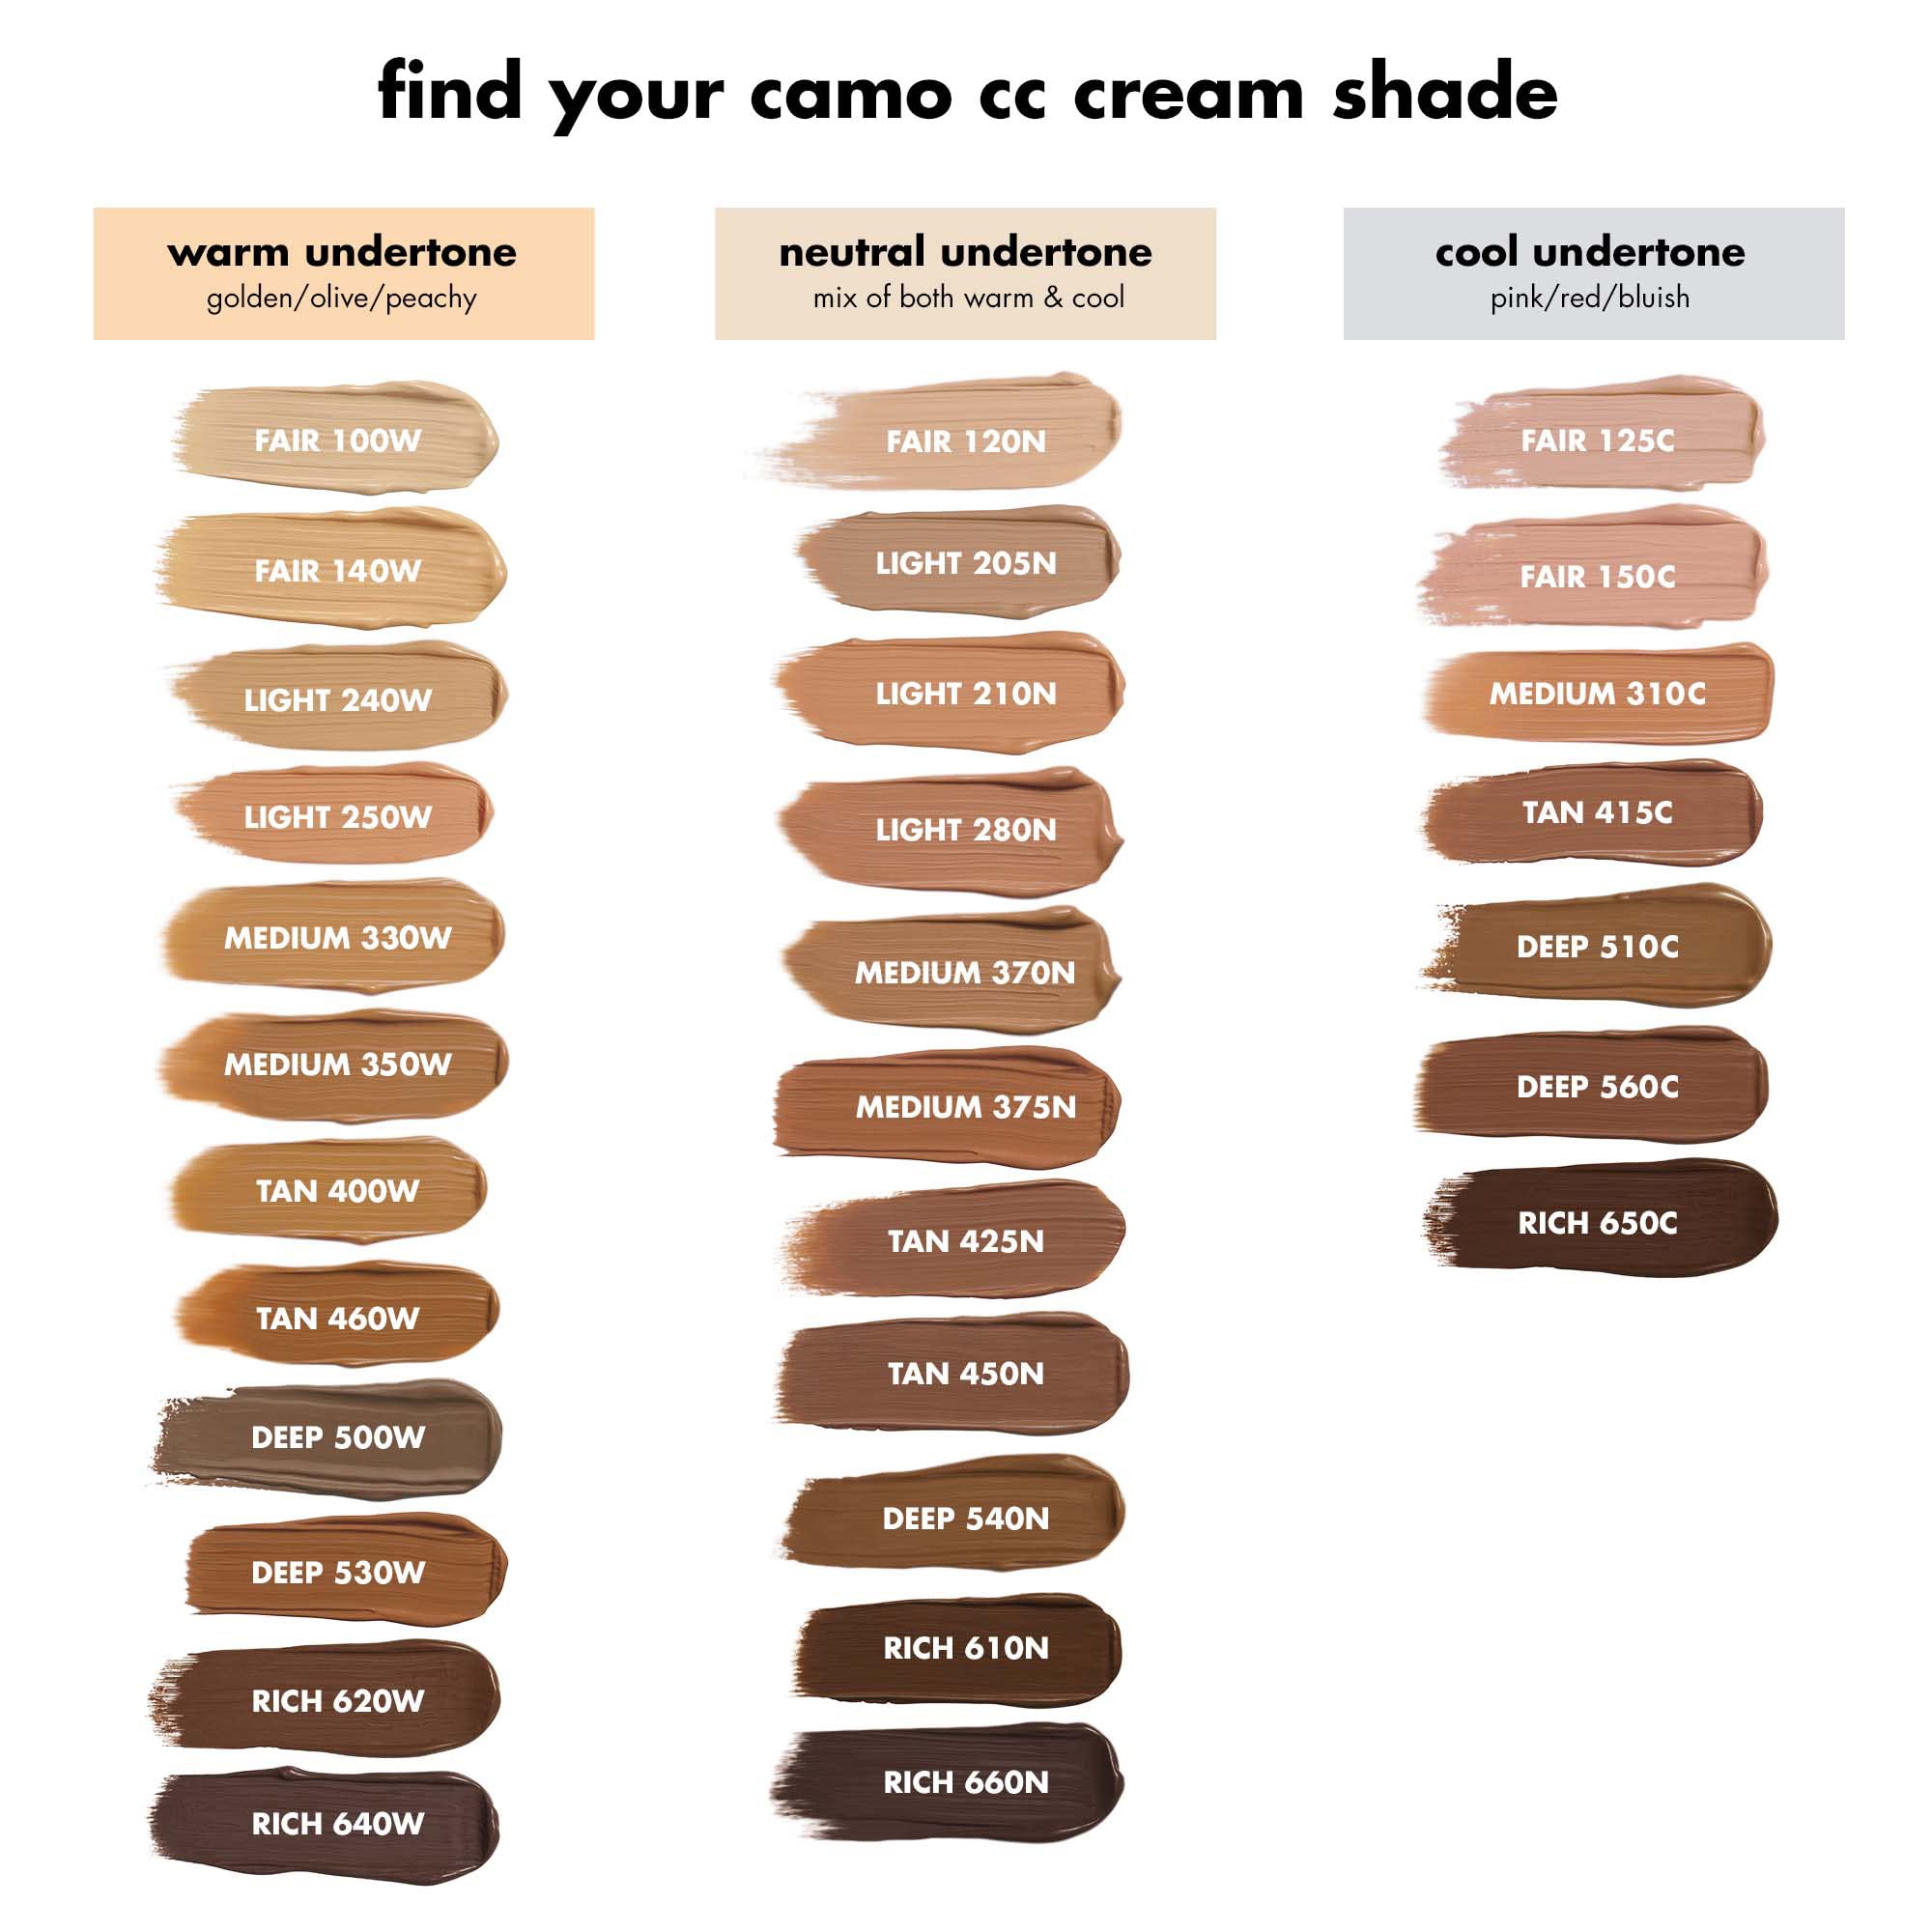 e.l.f. Camo CC Cream, Color Correcting Medium-To-Full Coverage Foundation with SPF 30, Medium 375 N, 1.05 Oz (30g)